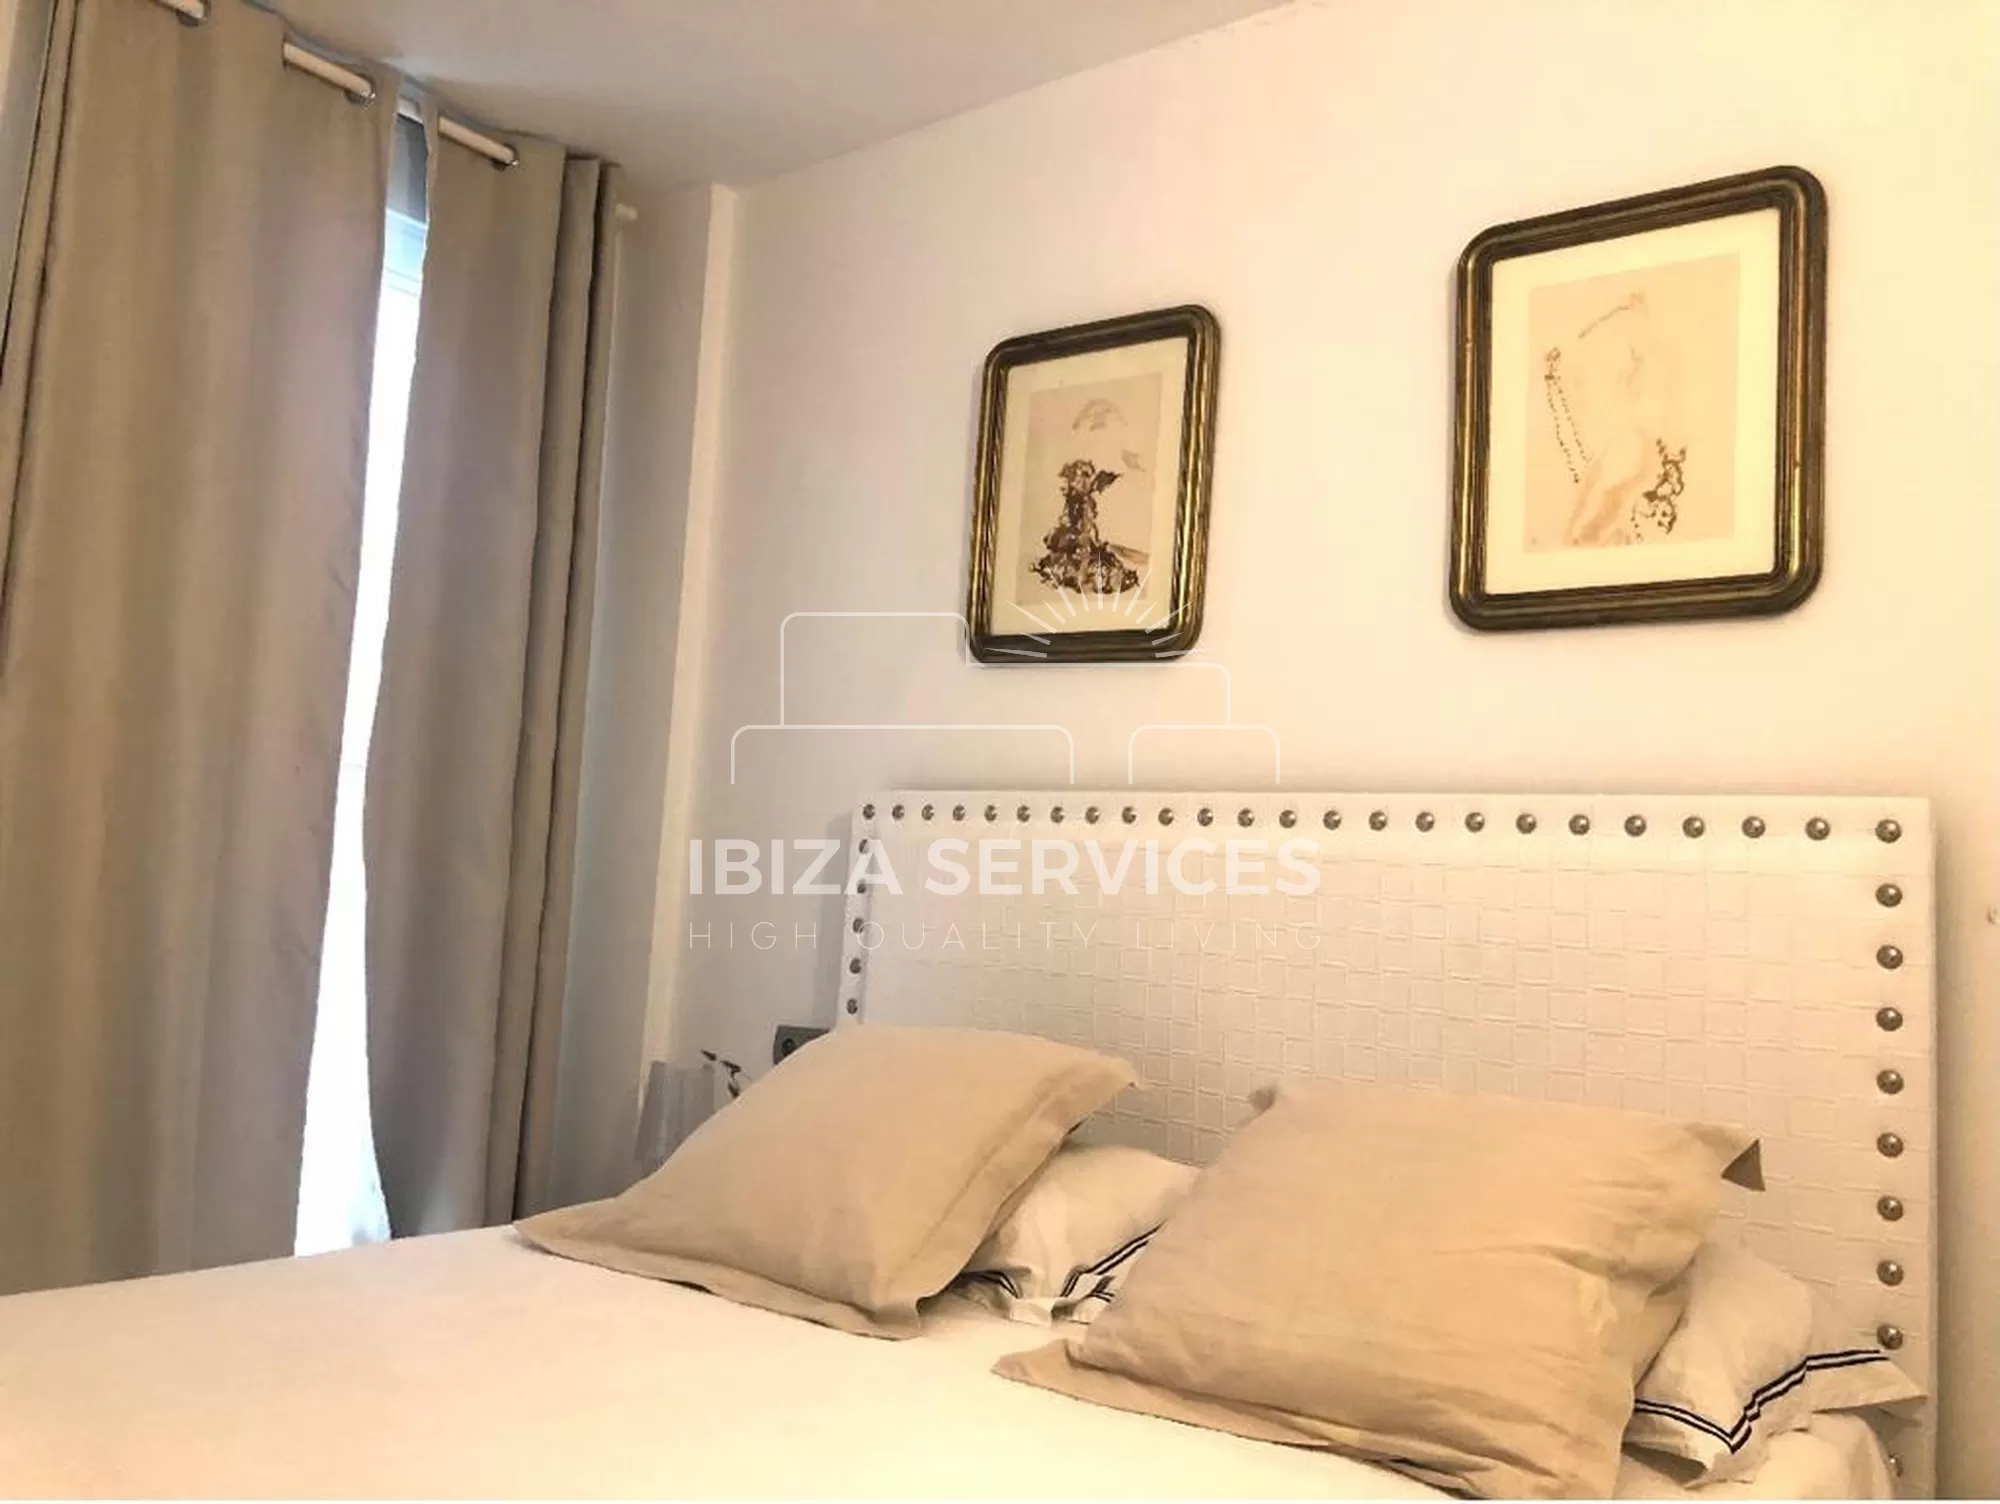 Seasonal rental 1 bedroom apartment Botafoch Ibiza